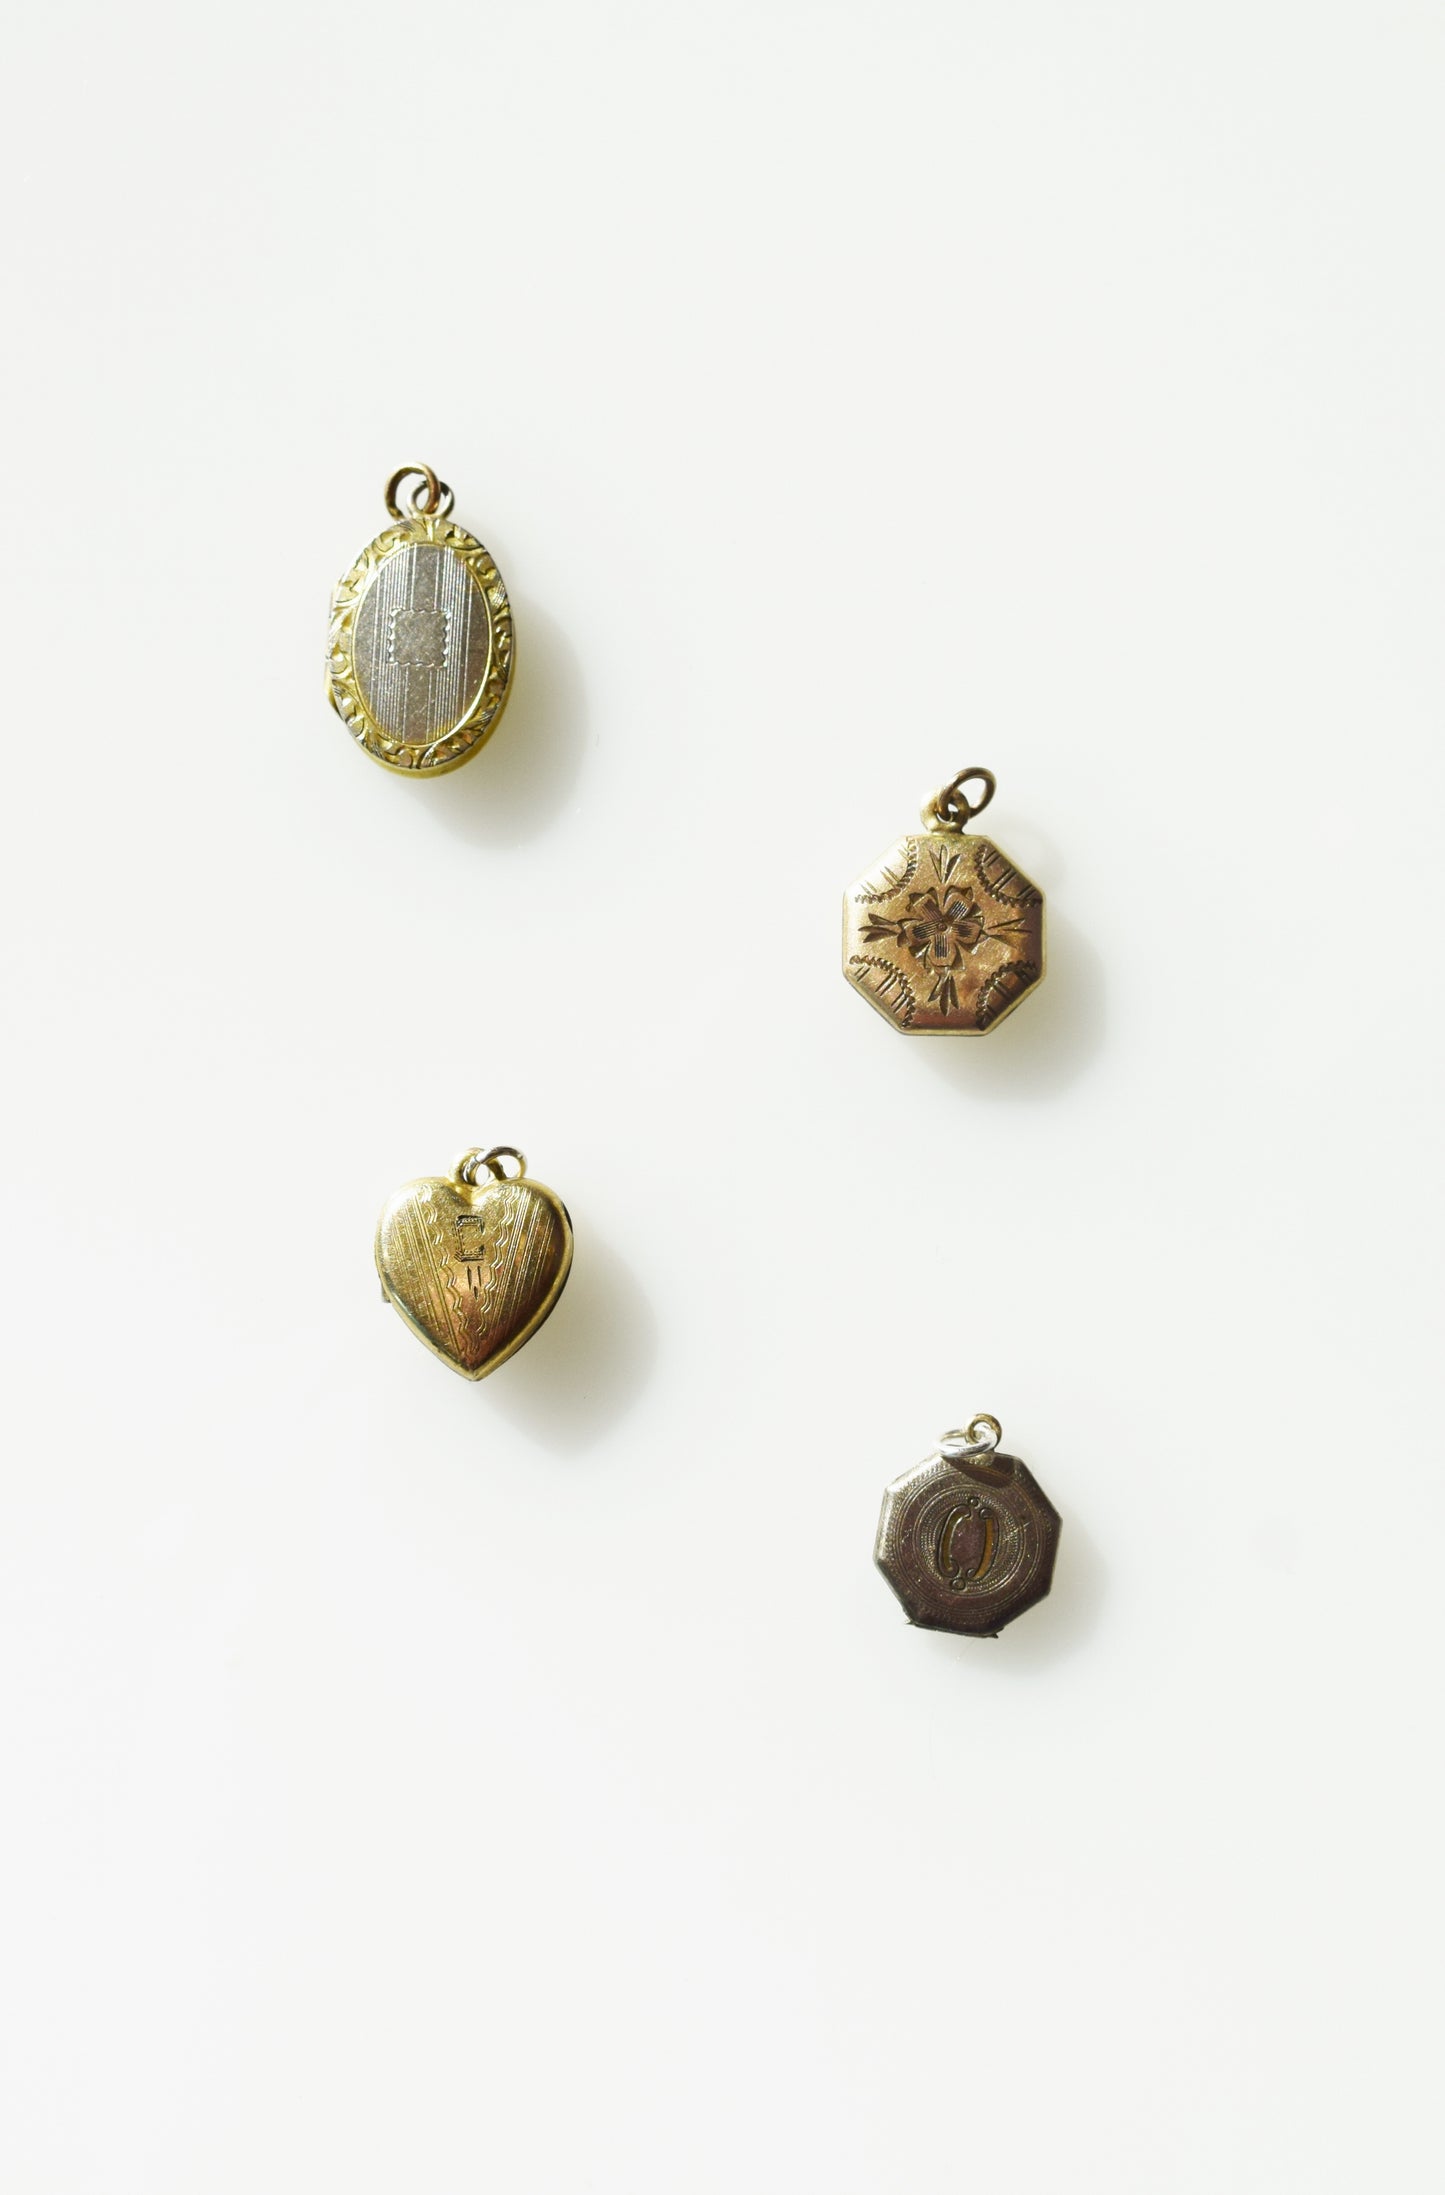 4 Tiny Antique Lockets - U Pick!